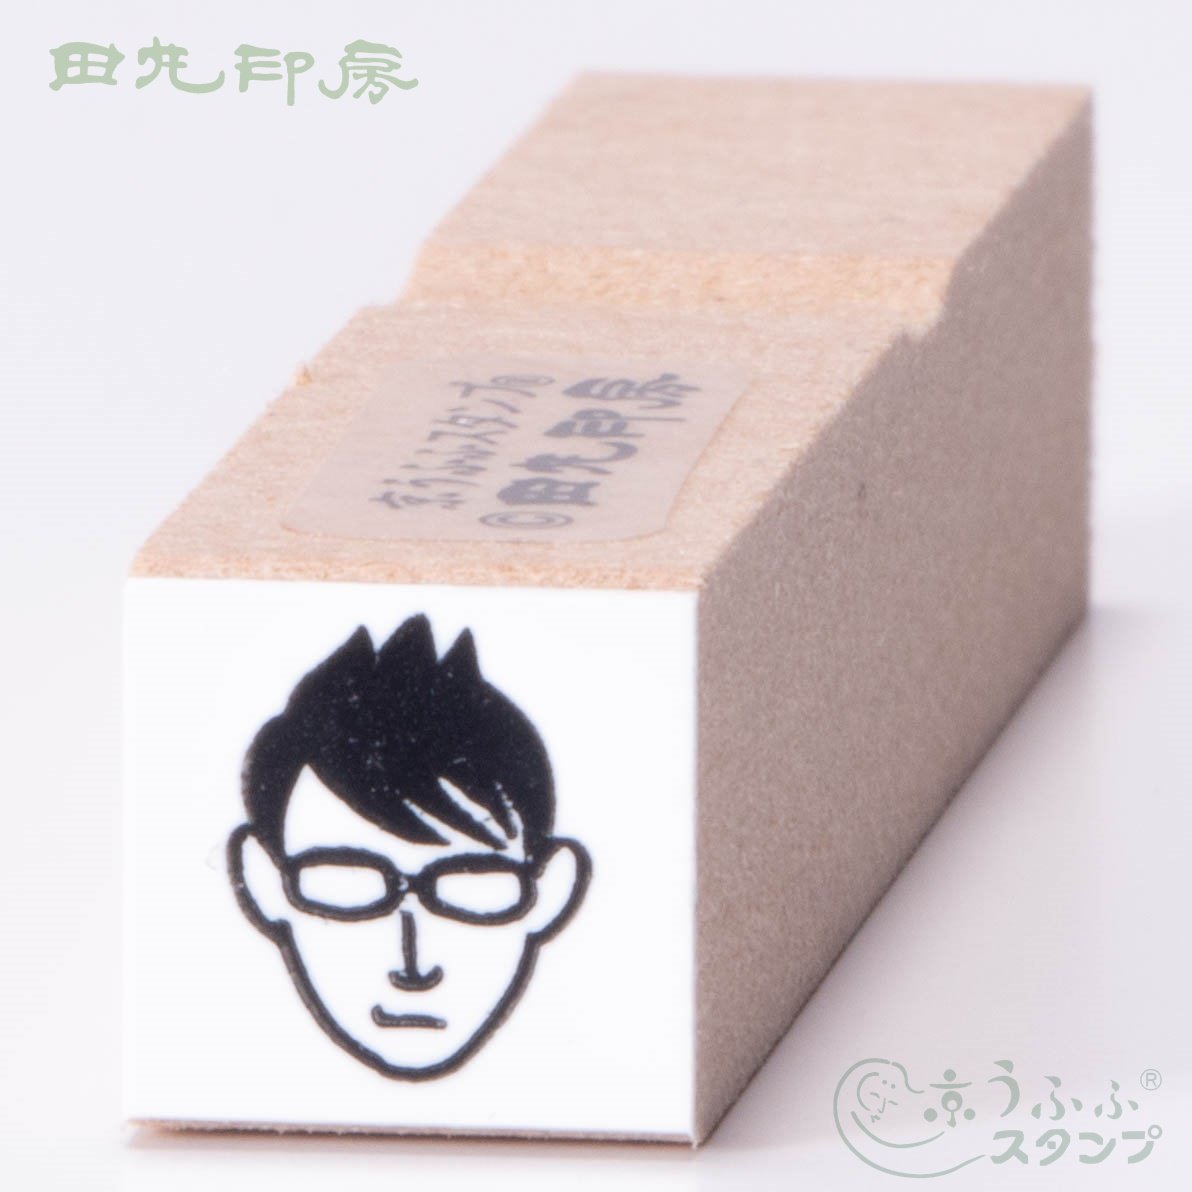 Mini stamp oval glasses man